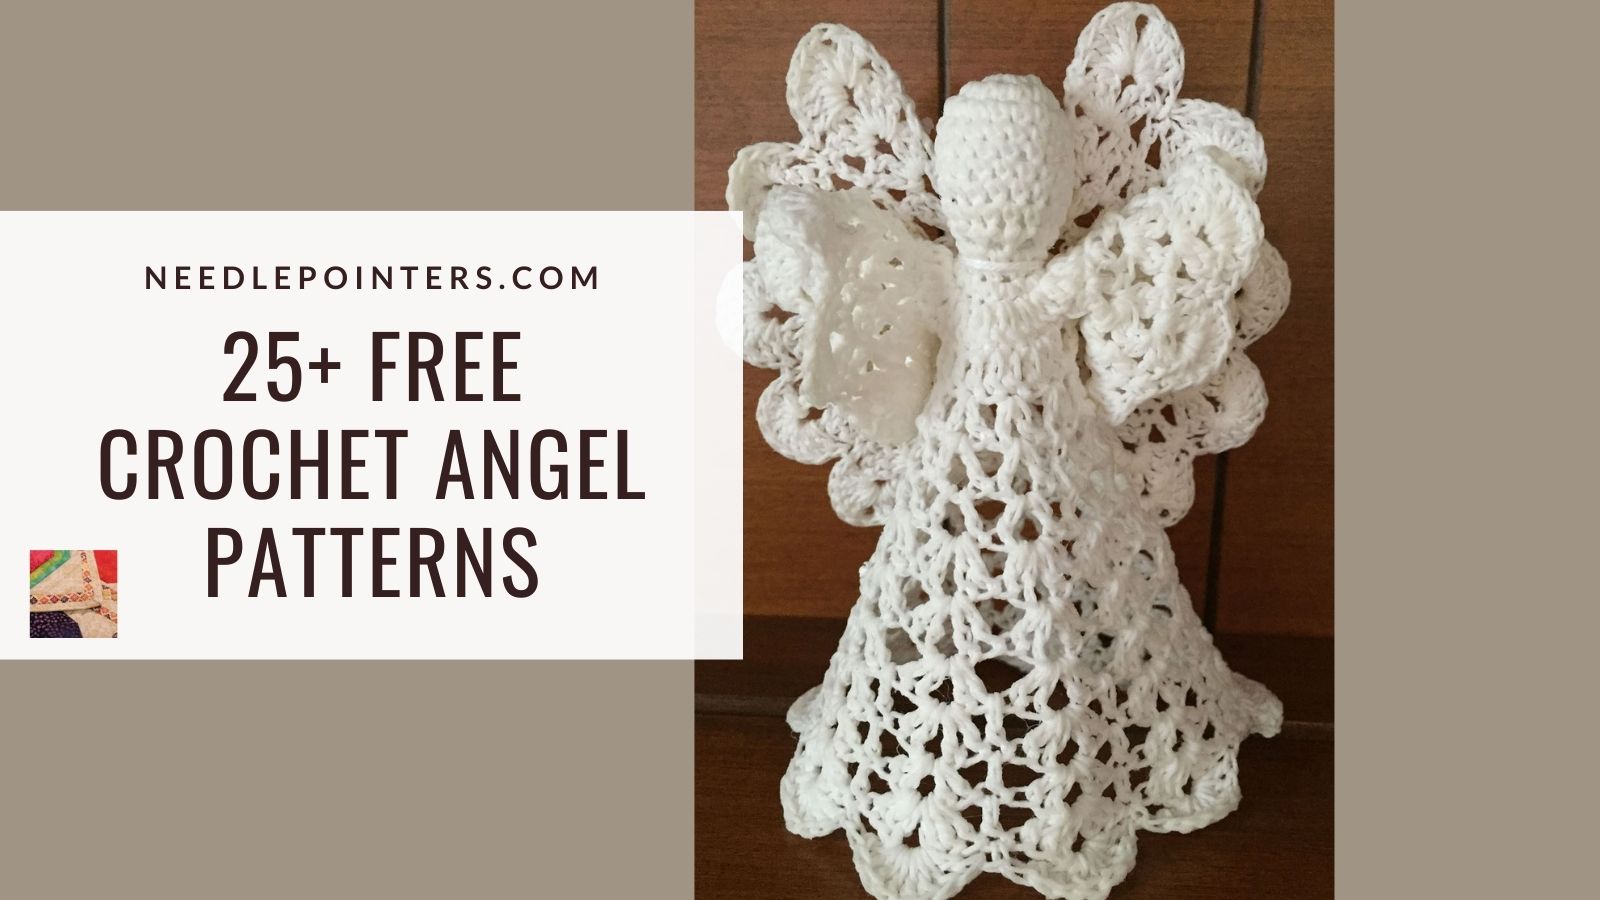 Hummingbird Ekspedient plyndringer 25+ Free Crochet Angel Patterns | Needlepointers.com